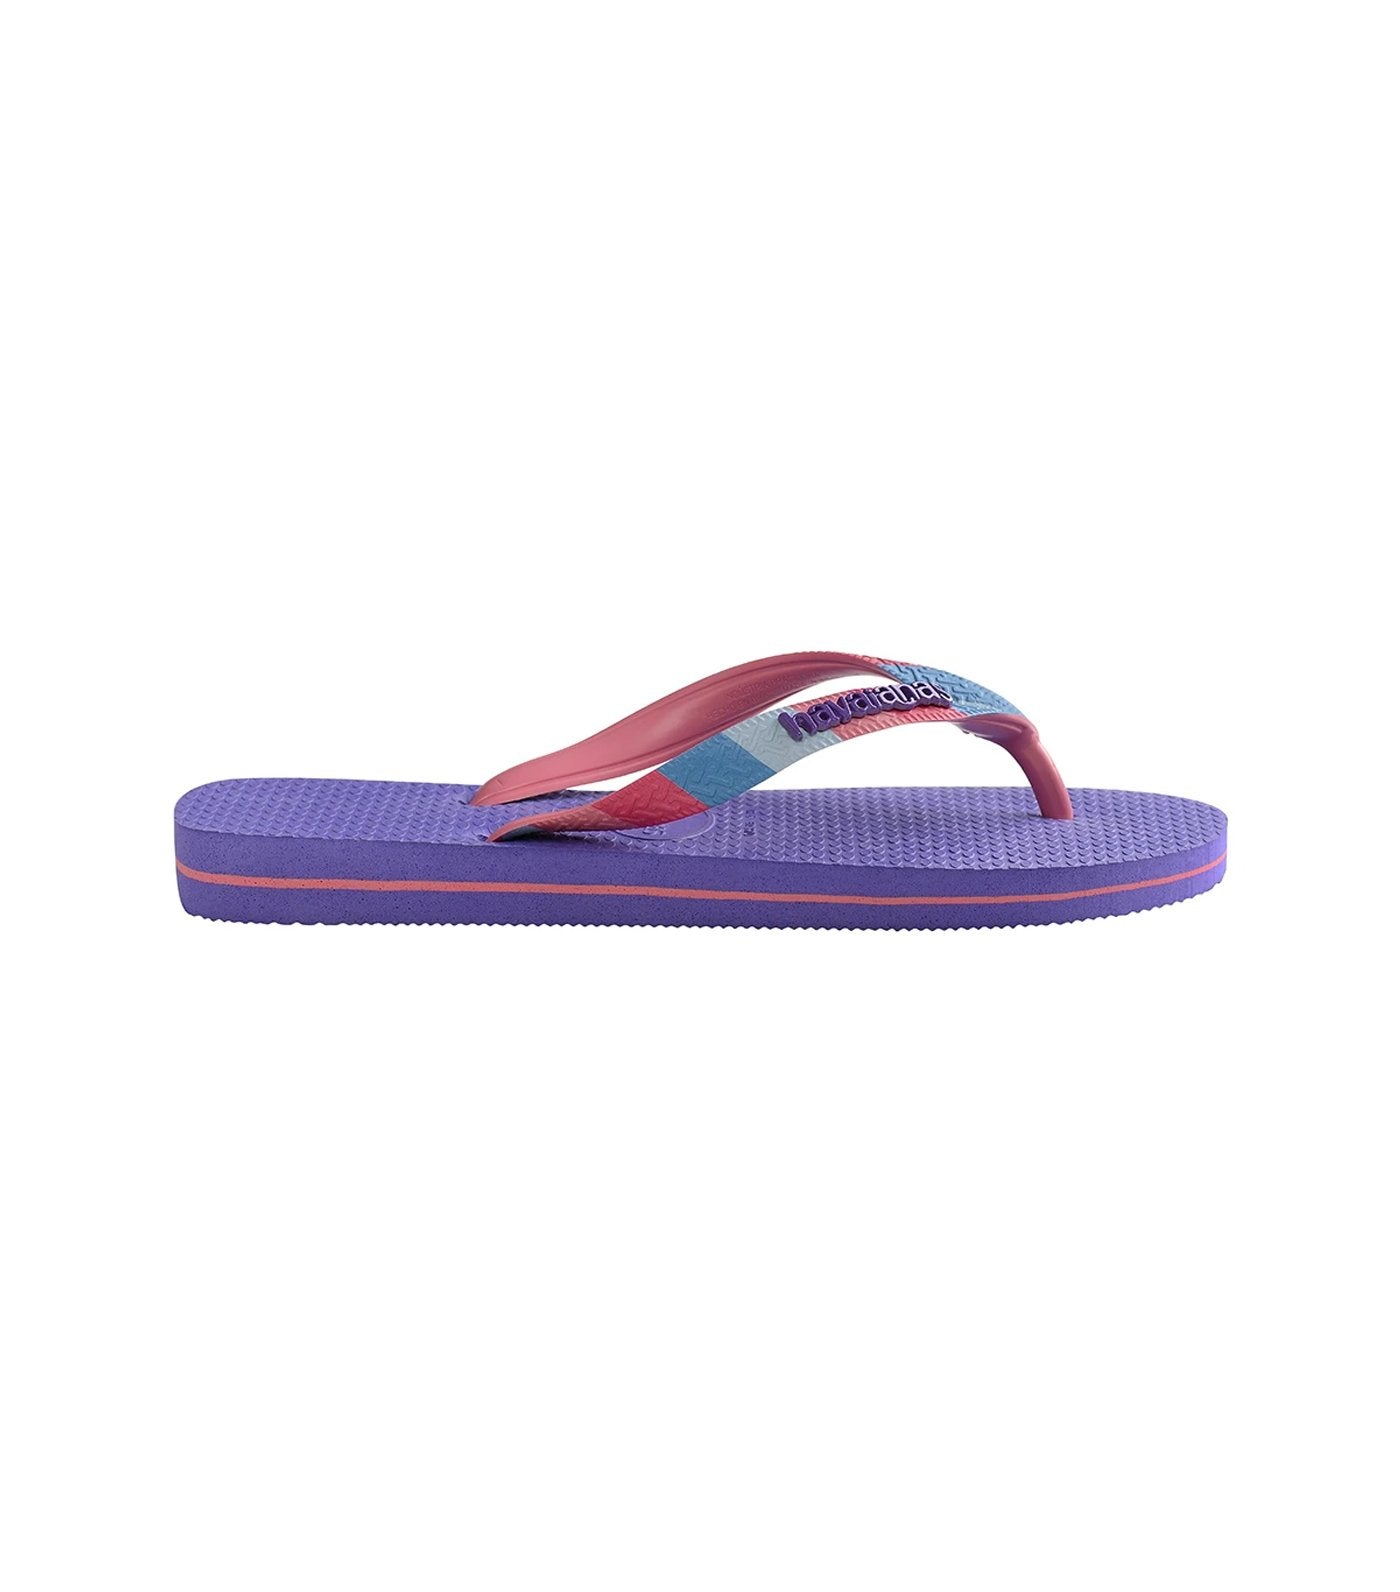 Havaianas Top Verano Flip Flops - Purple